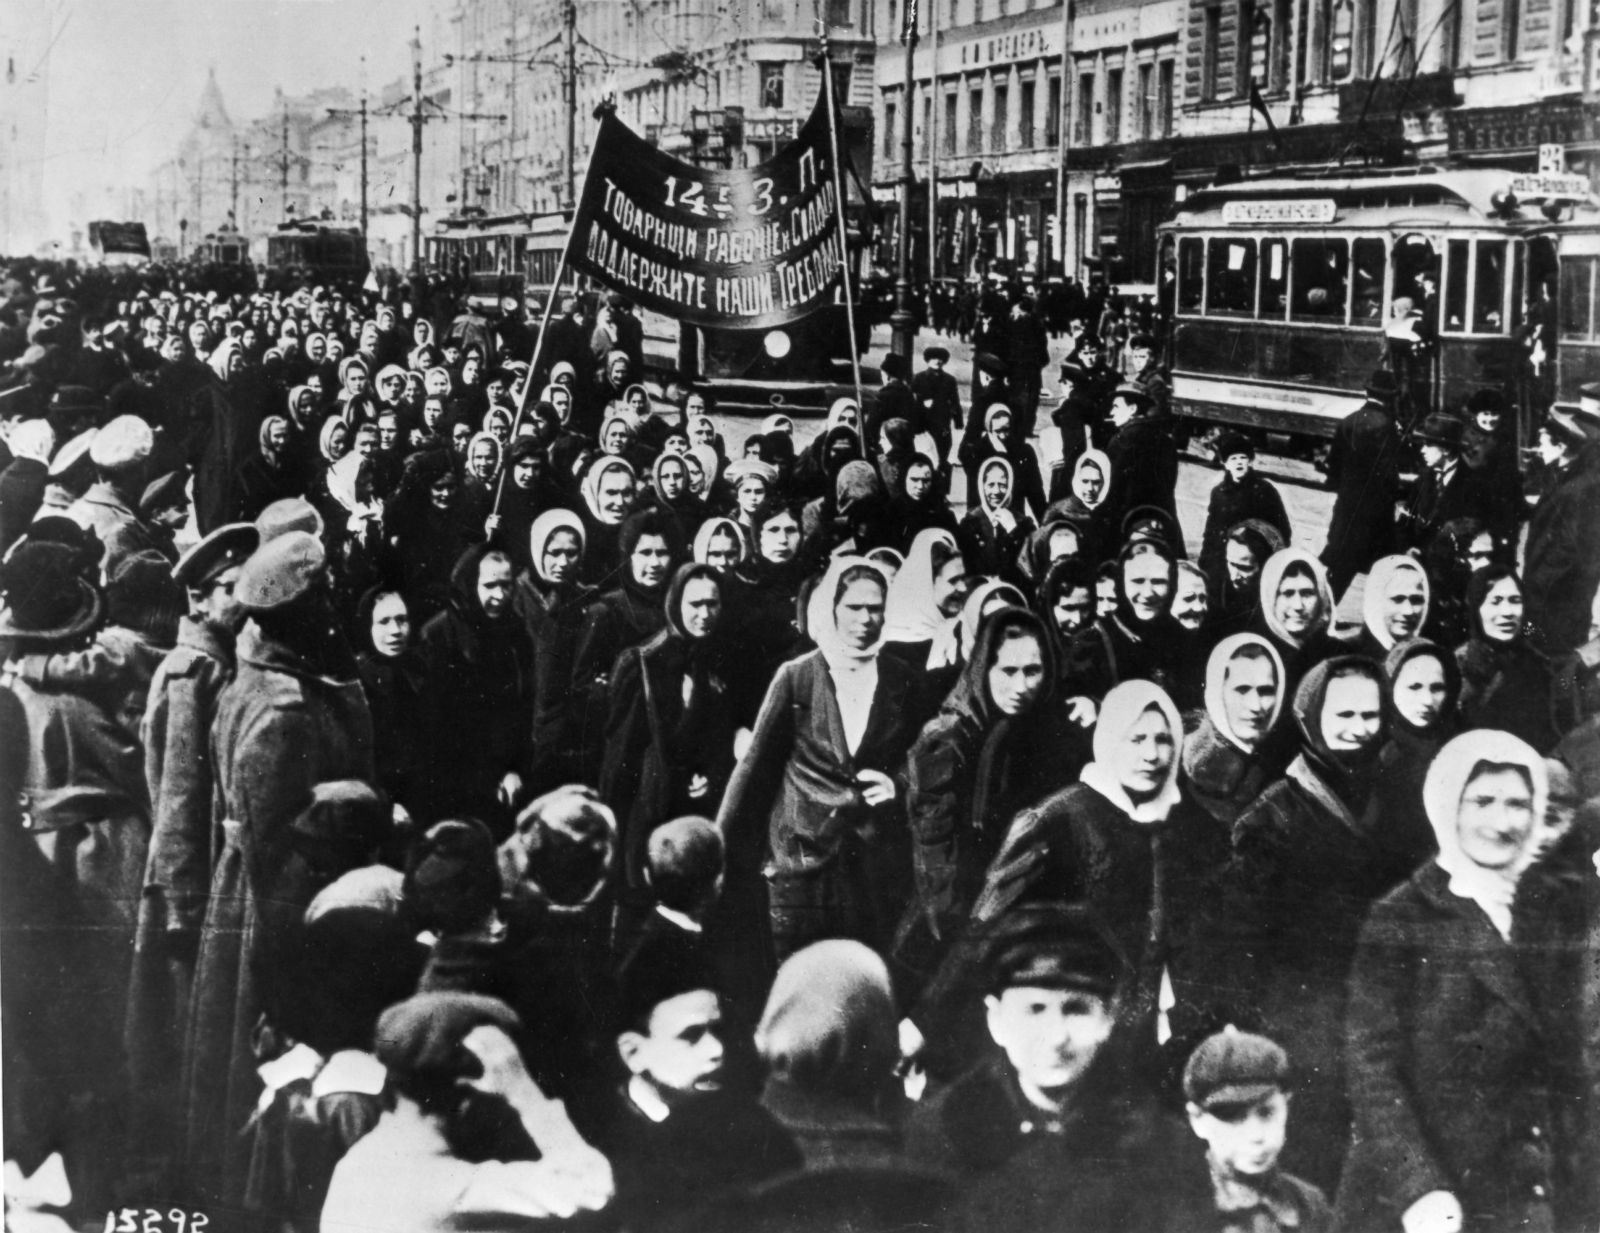 1917 International Womens Day Petrograd Image public domain